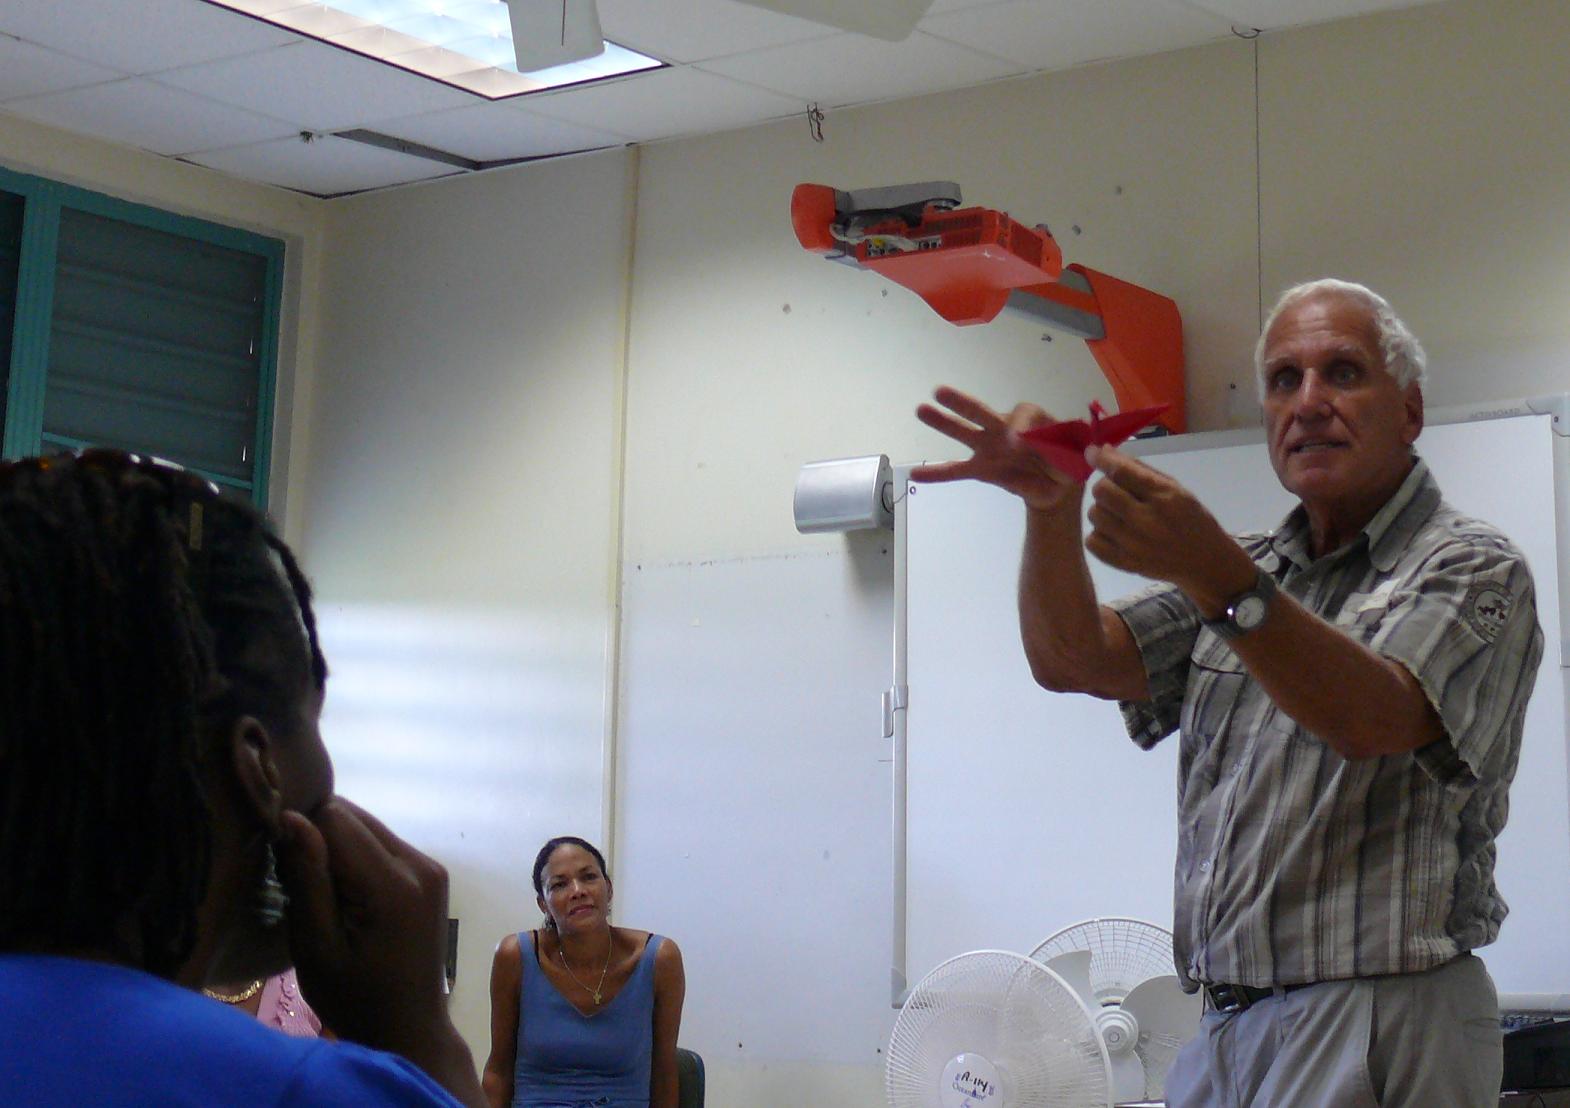 Retired St. Croix teacher Cy Levine demonstrates origami at the St. Croix MiniQuEST teacher development conference Monday.